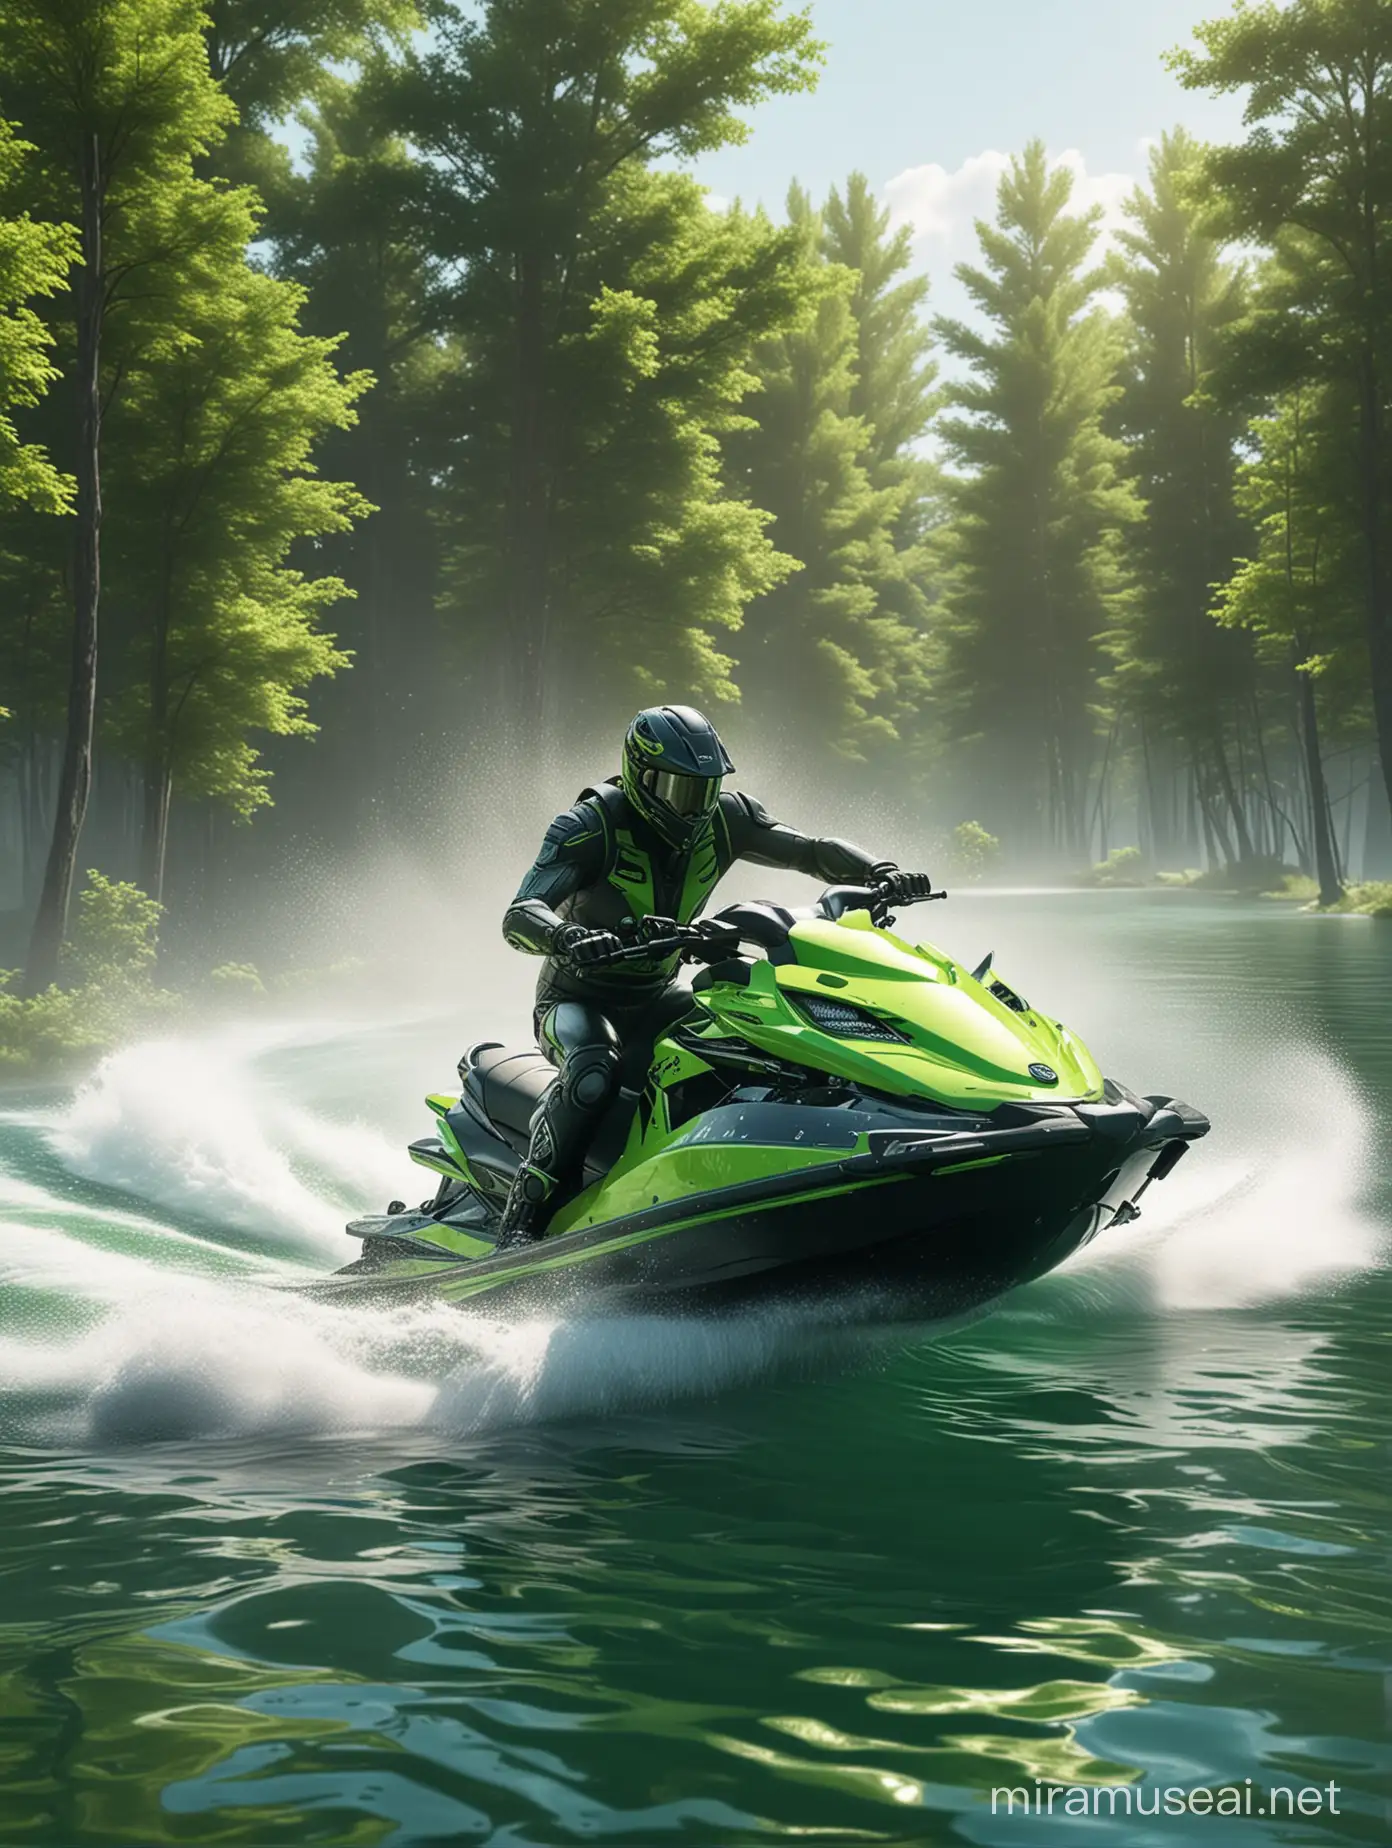 Neon Green Jetski Racing Through Sunlit Waters Amidst Lush Trees